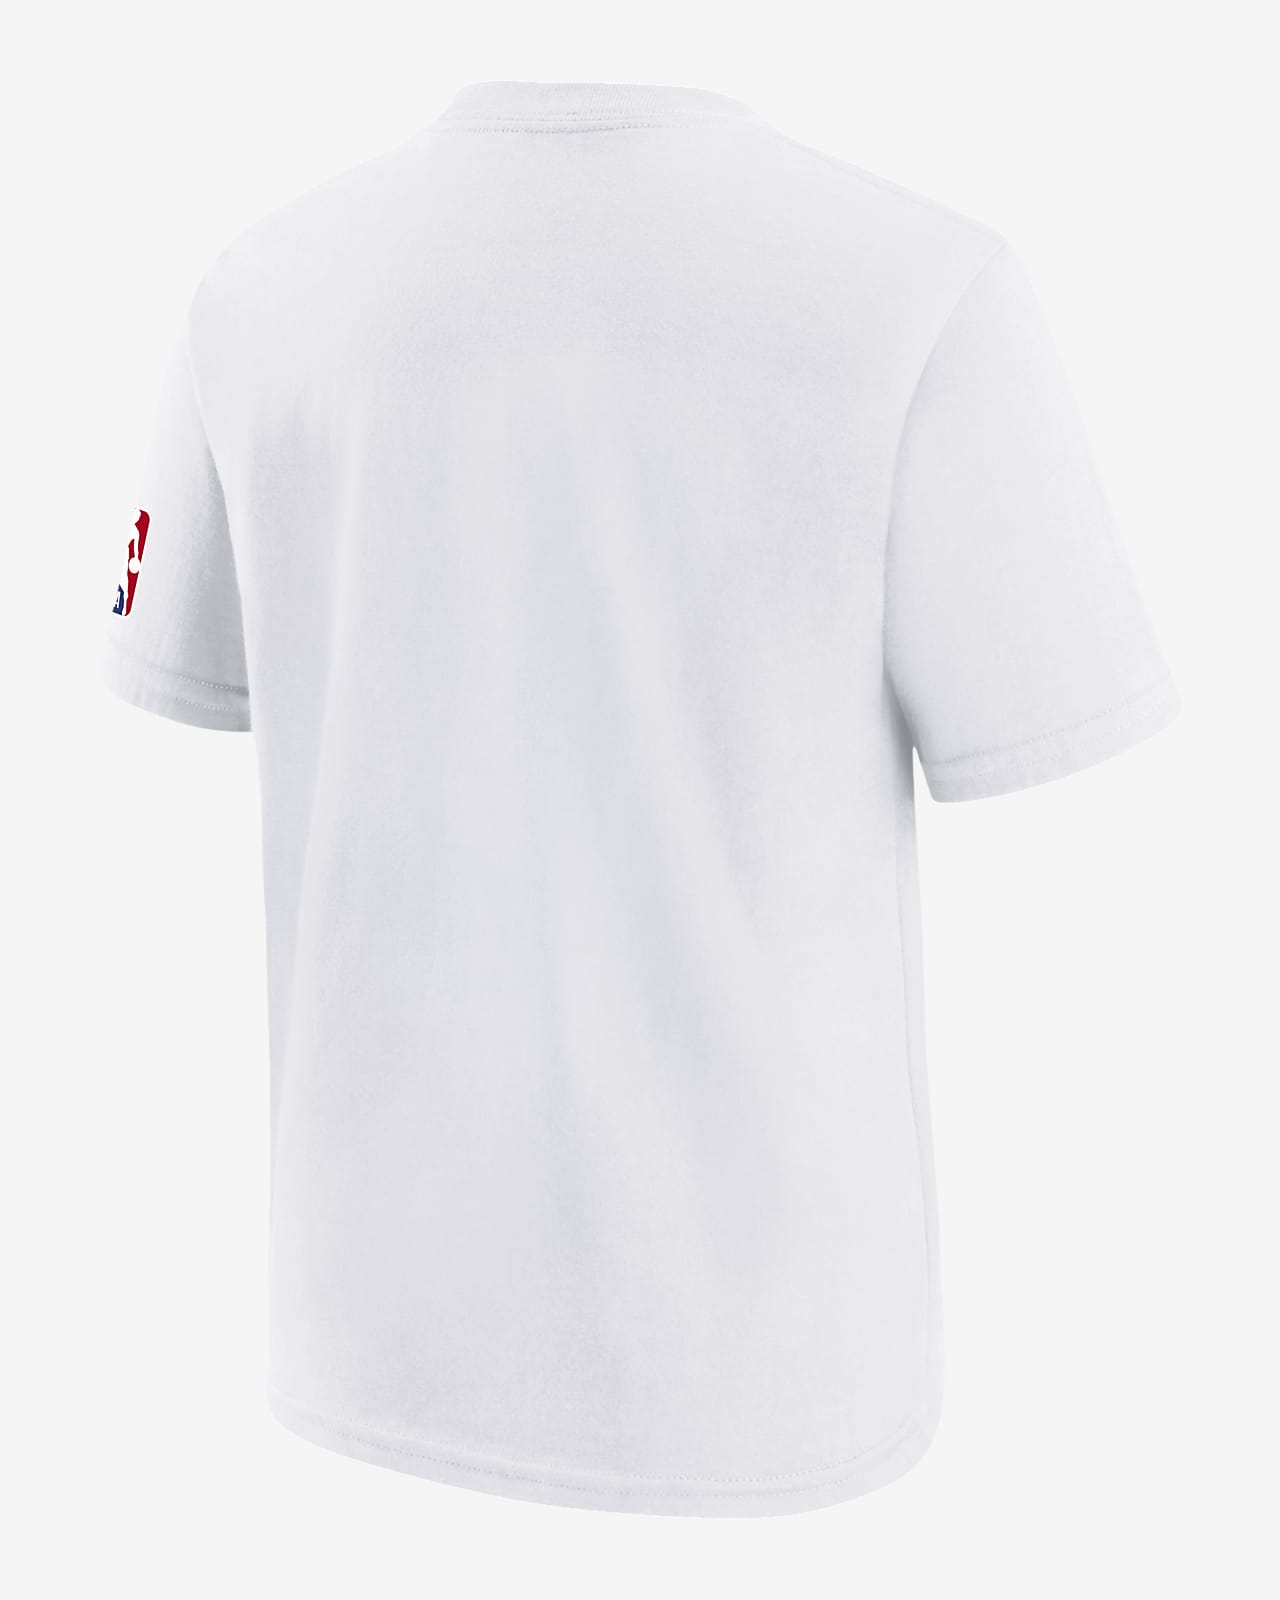 Unk NBA Store Brooklyn Nets T-shirt NEW NWT S Embossed Printing